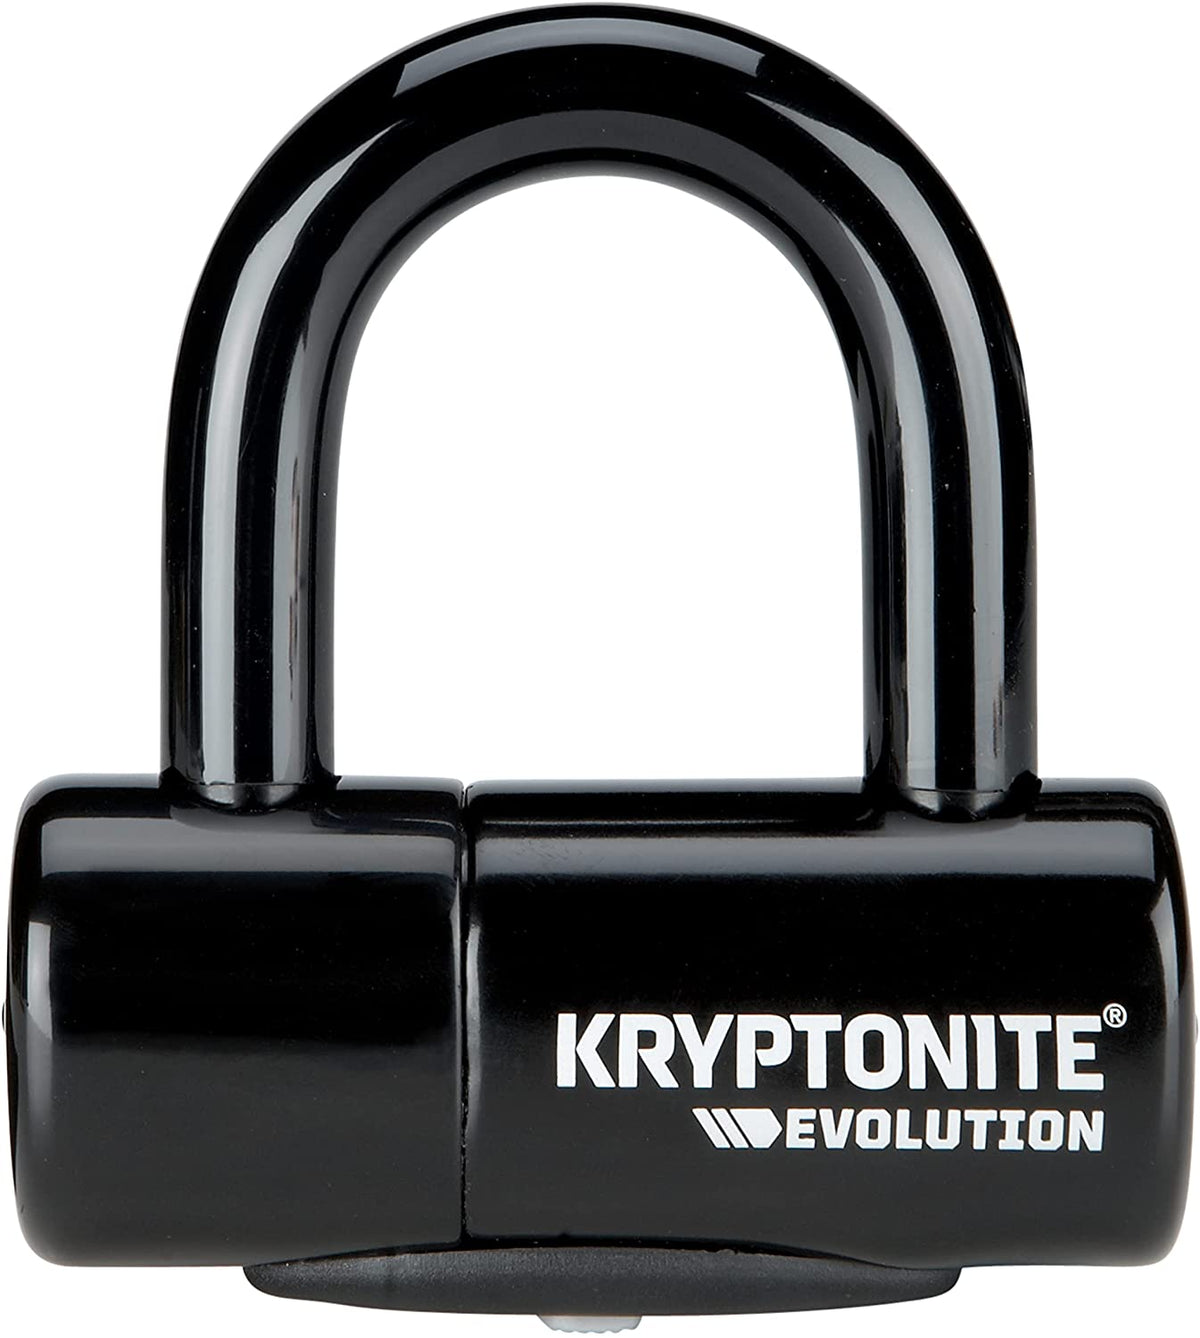 Kryptonite Evolution Series 4 Disk Bike Lock